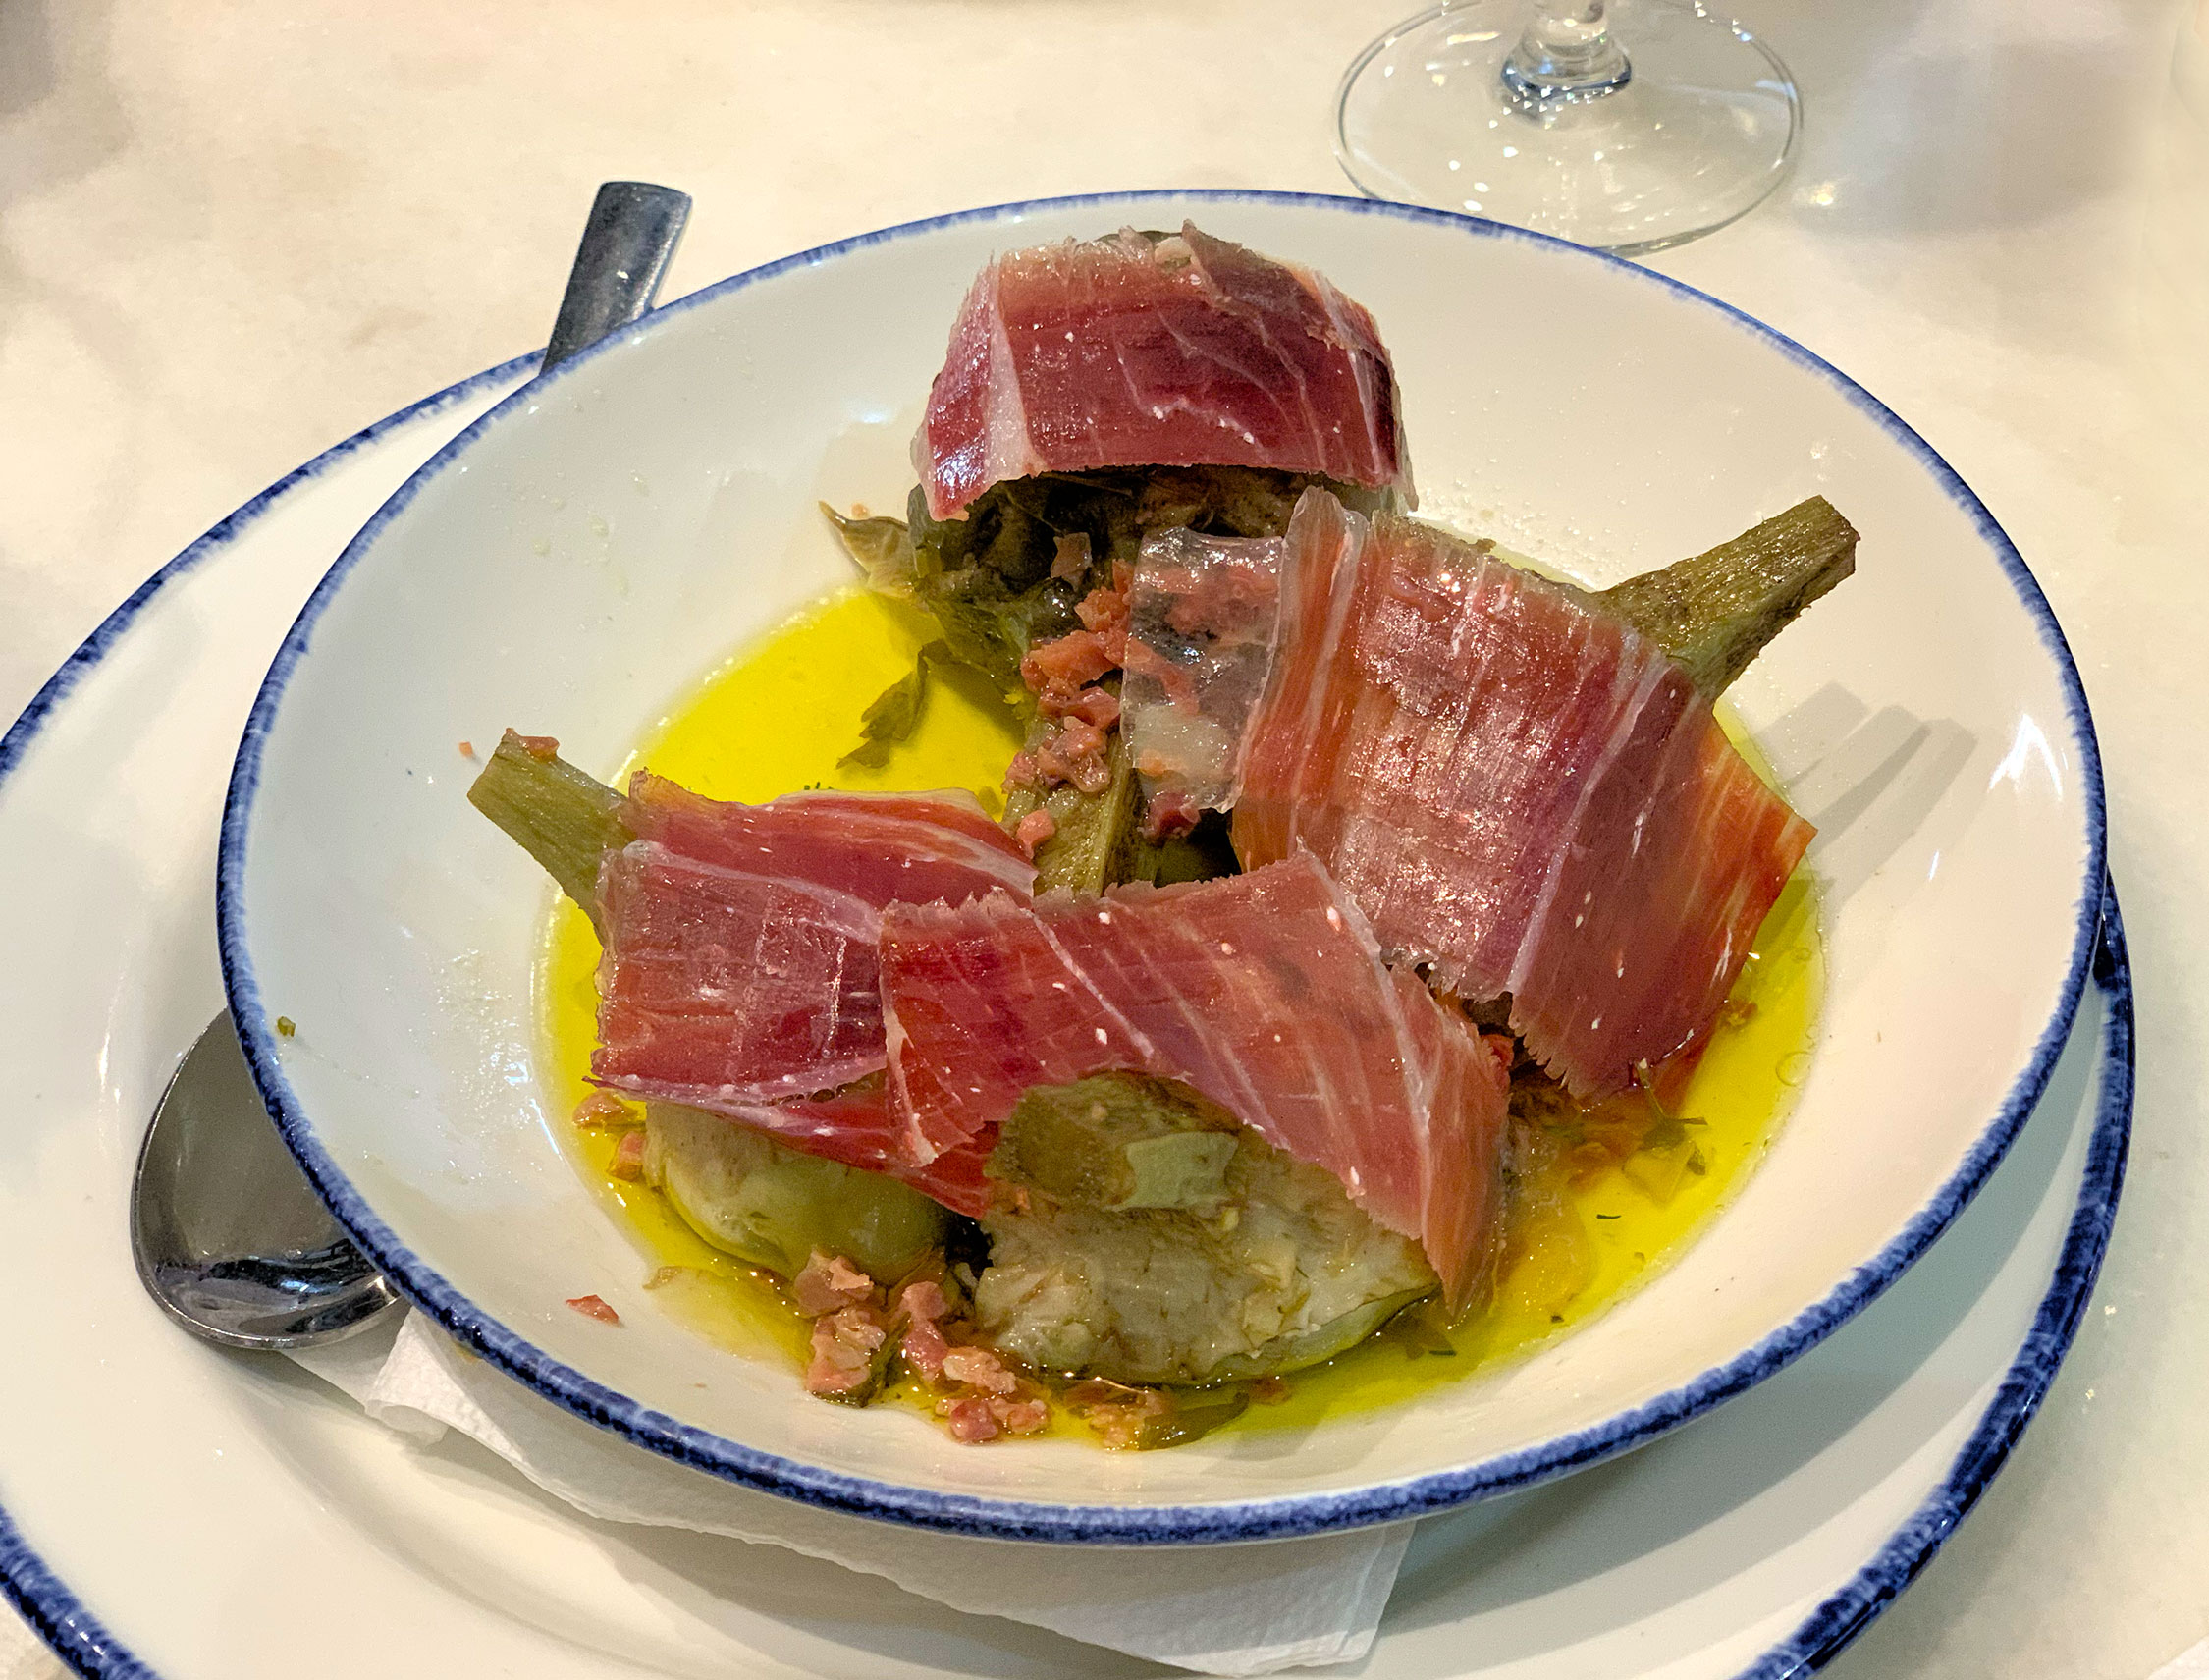 Artichokes confit in olive oil with Iberian ham